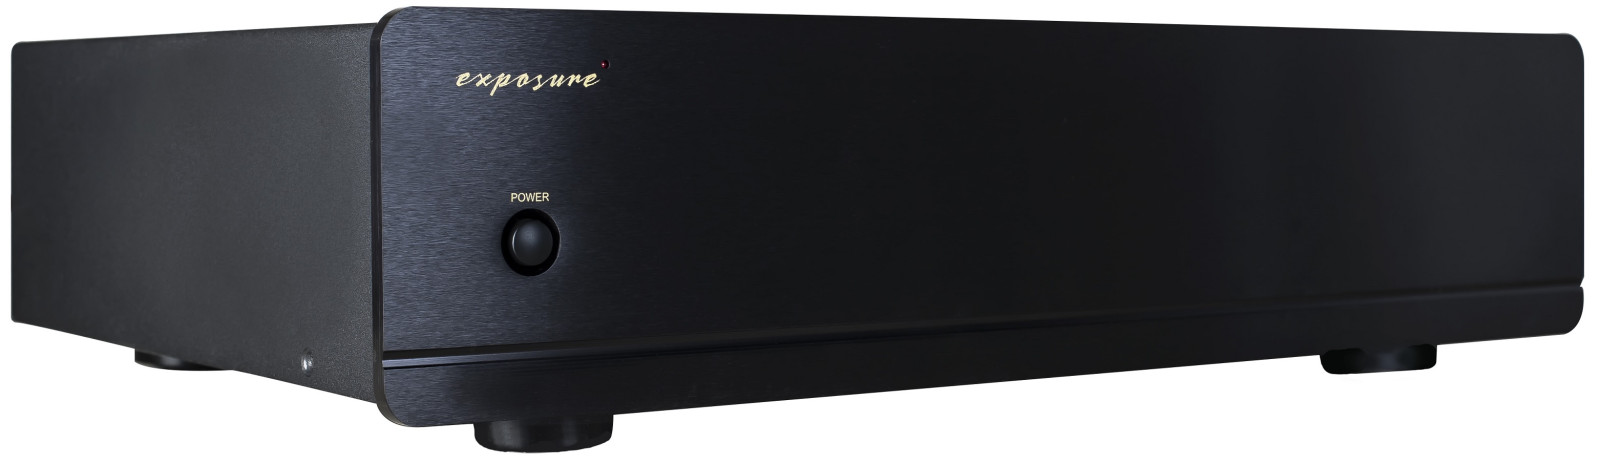 Exposure 3510 stereo power amplifier - black